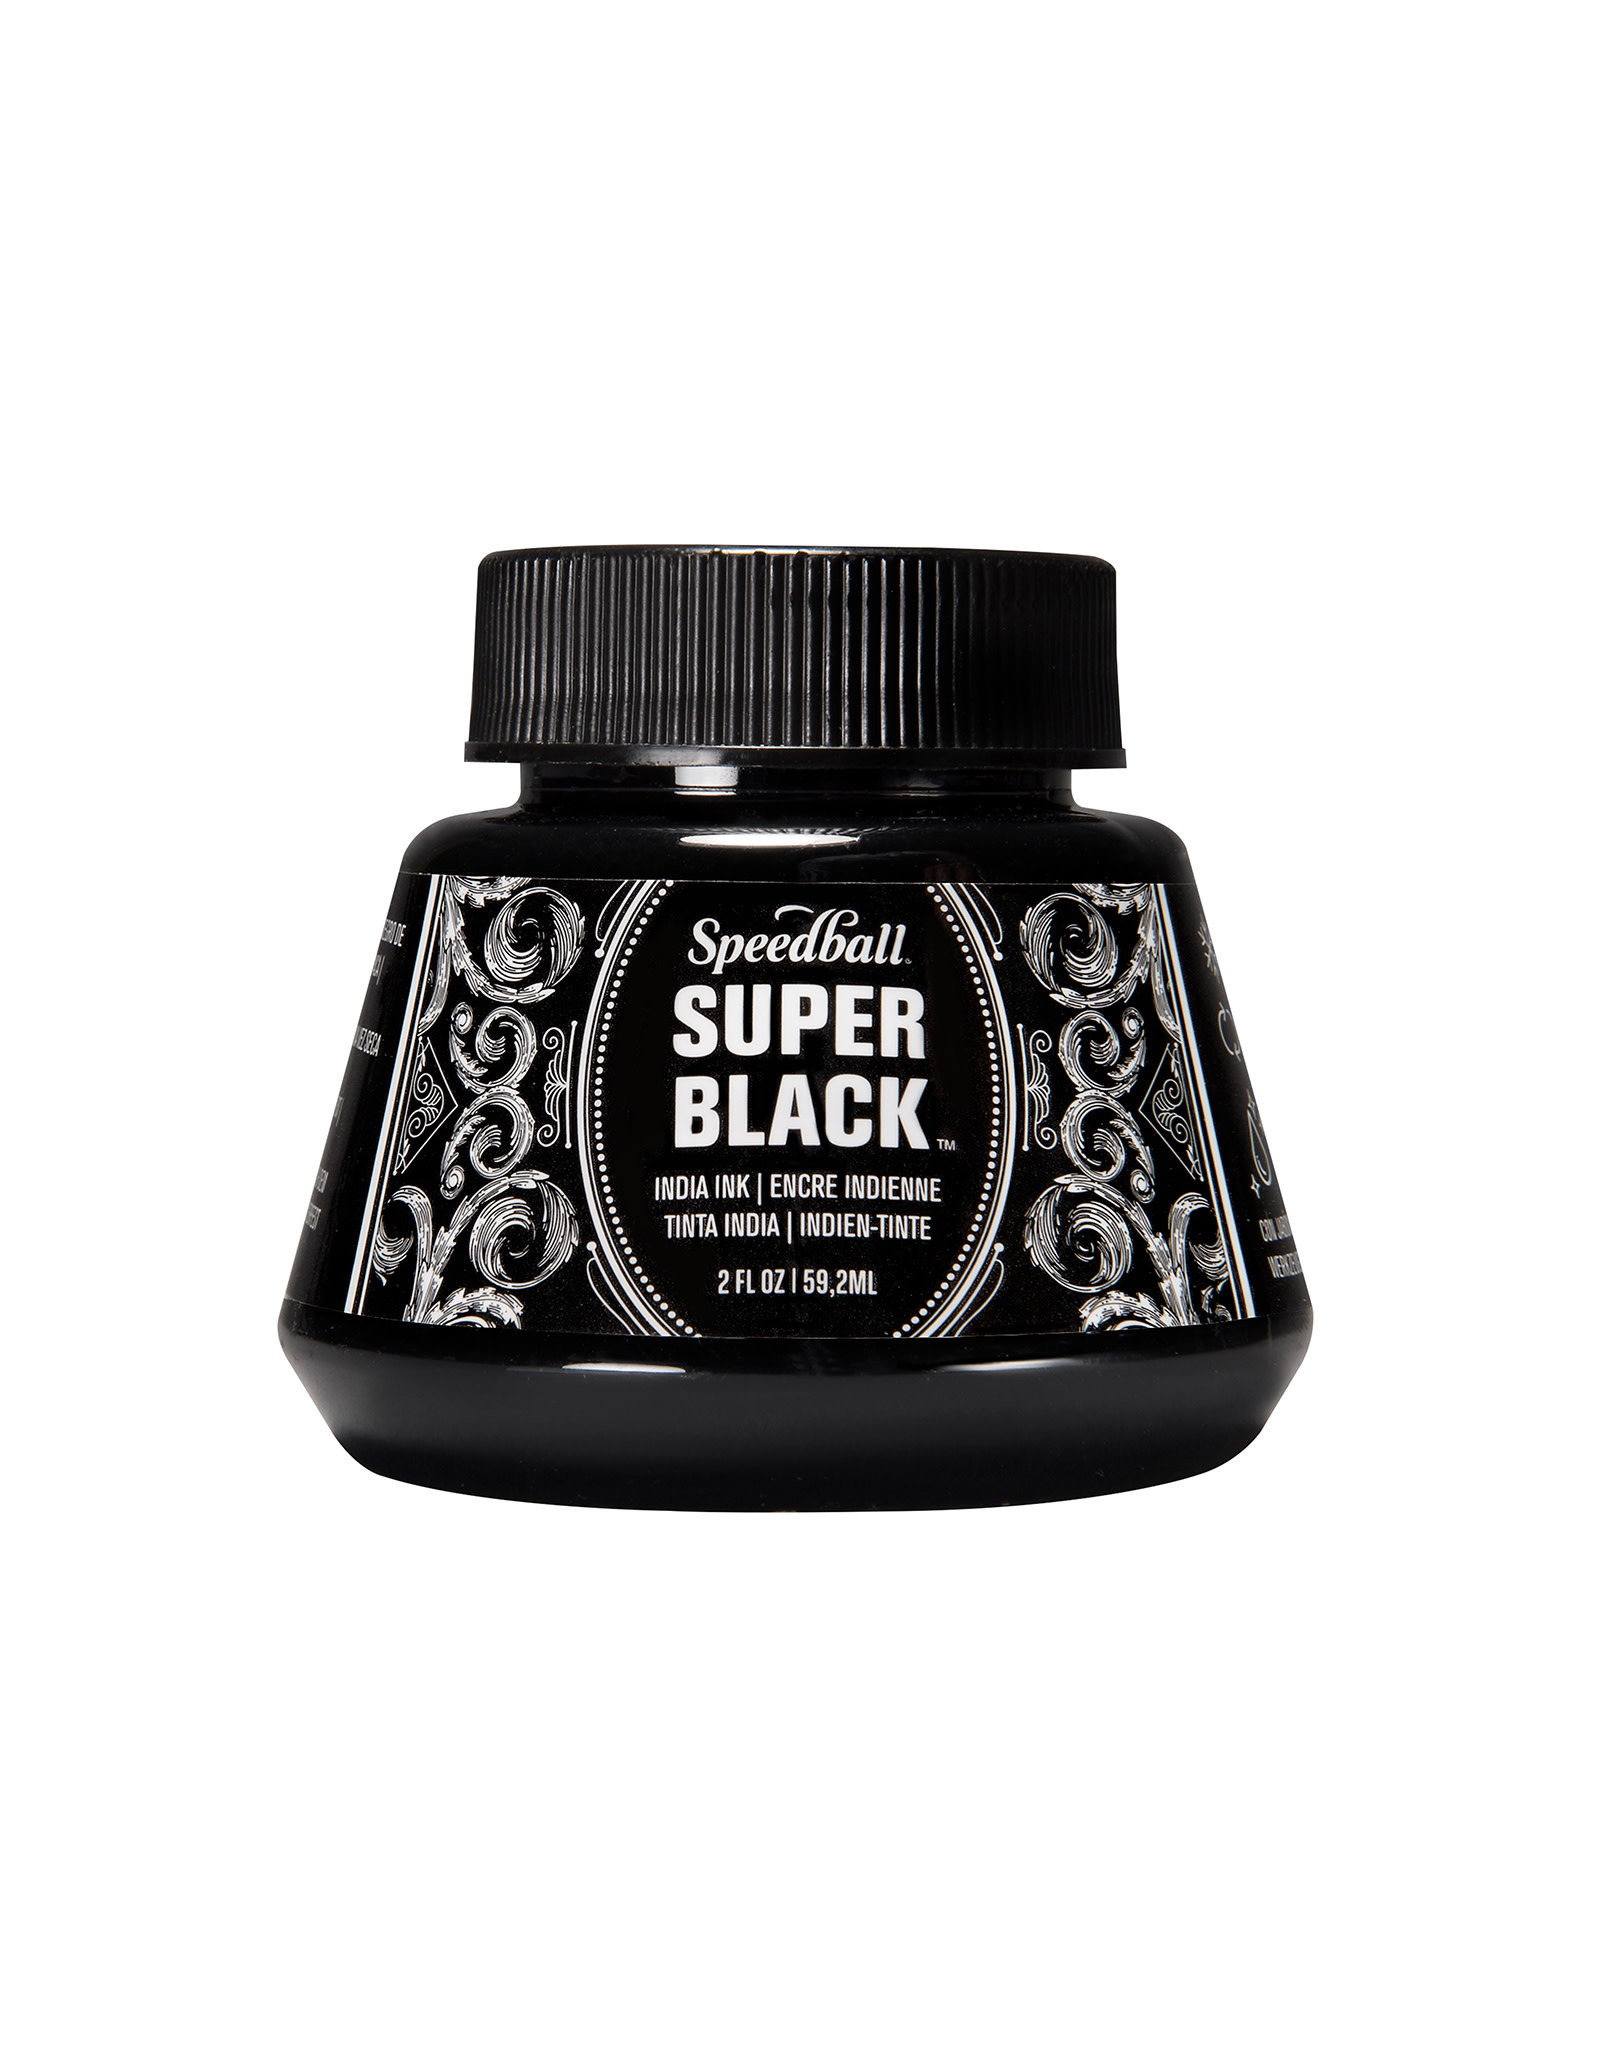 SPEEDBALL ART PRODUCTS Speedball Super Black India Ink, 2oz